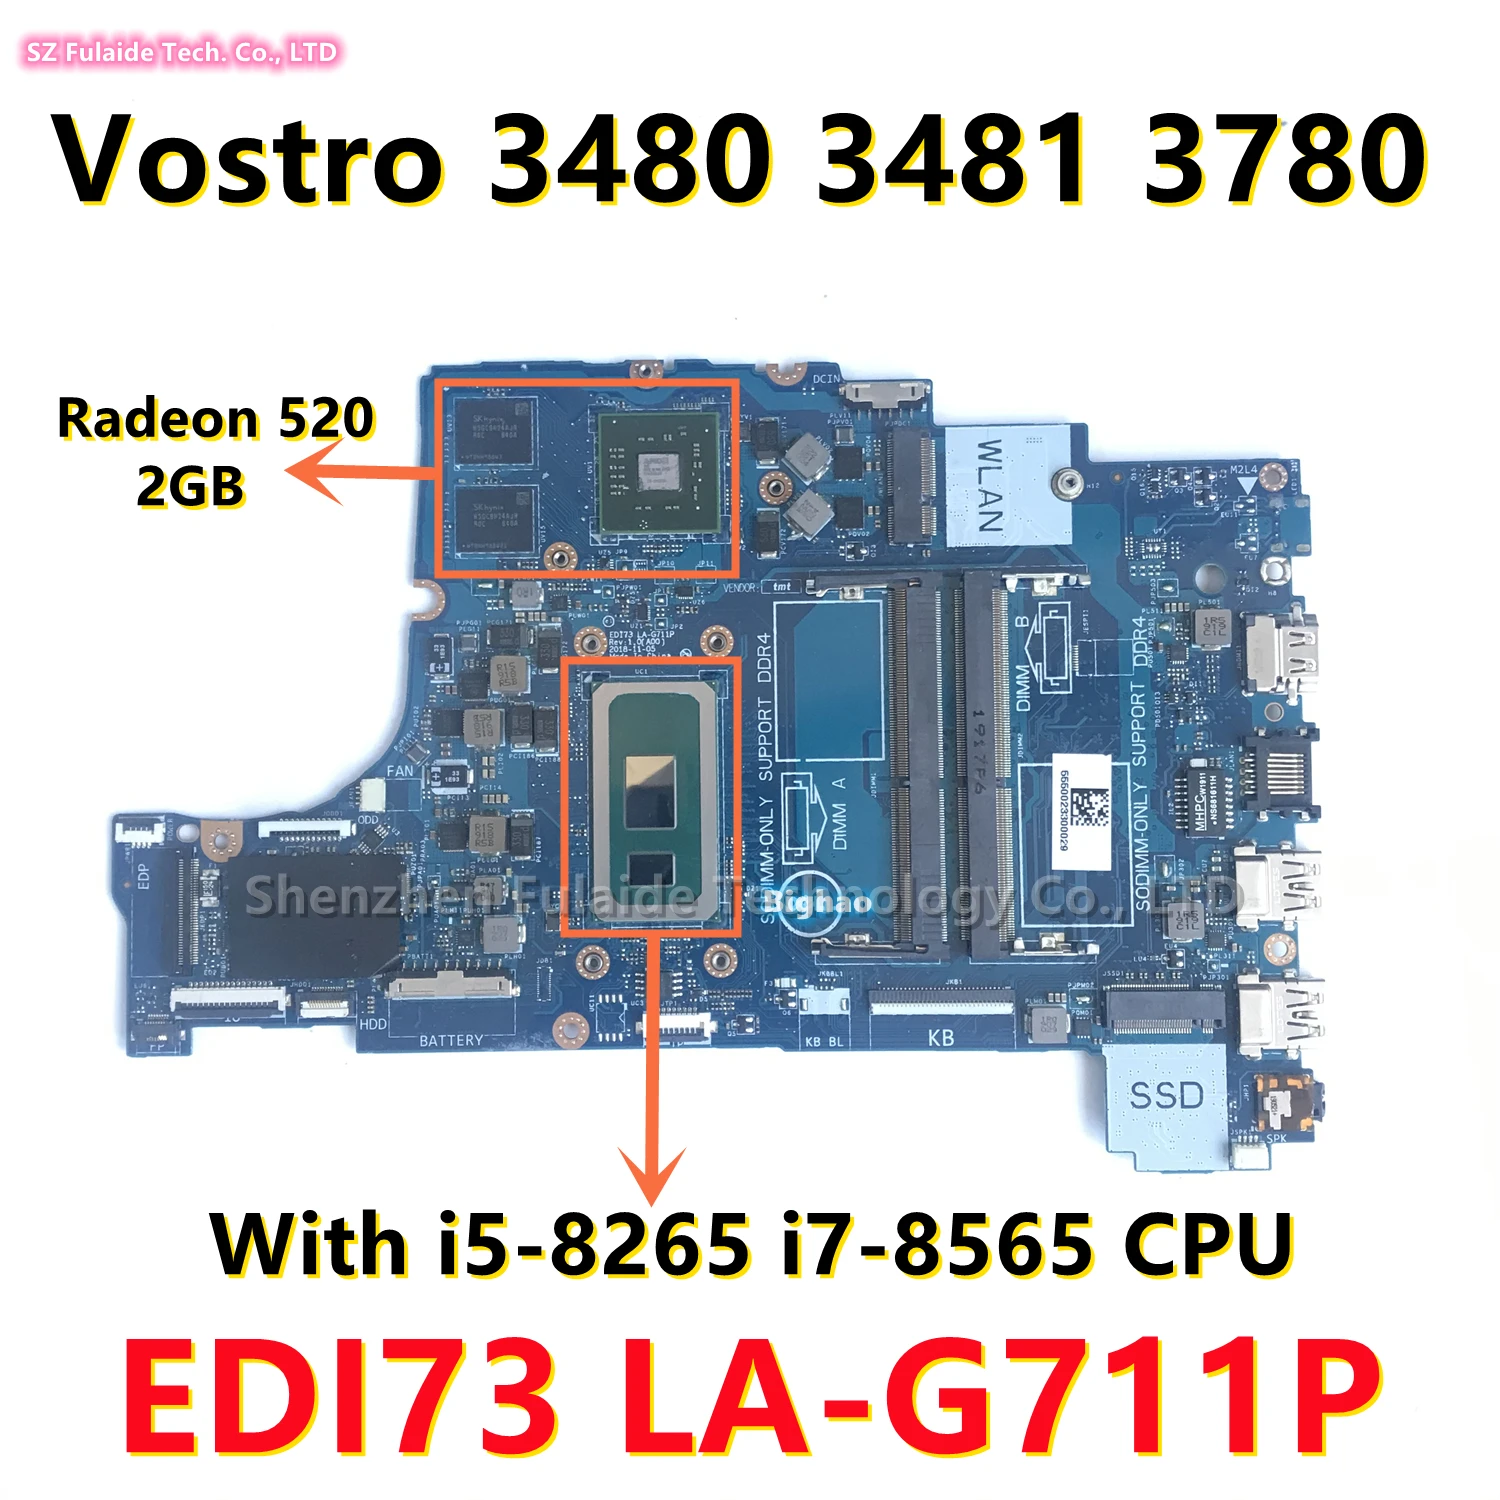 

EDI73 LA-G711P For DELL Vostro 3480 3481 3780 Laptop Motherboard With i5 i7 CPU Radeon 520 2GB-GPU CN-0XC07X 0VT31N 0MDK17